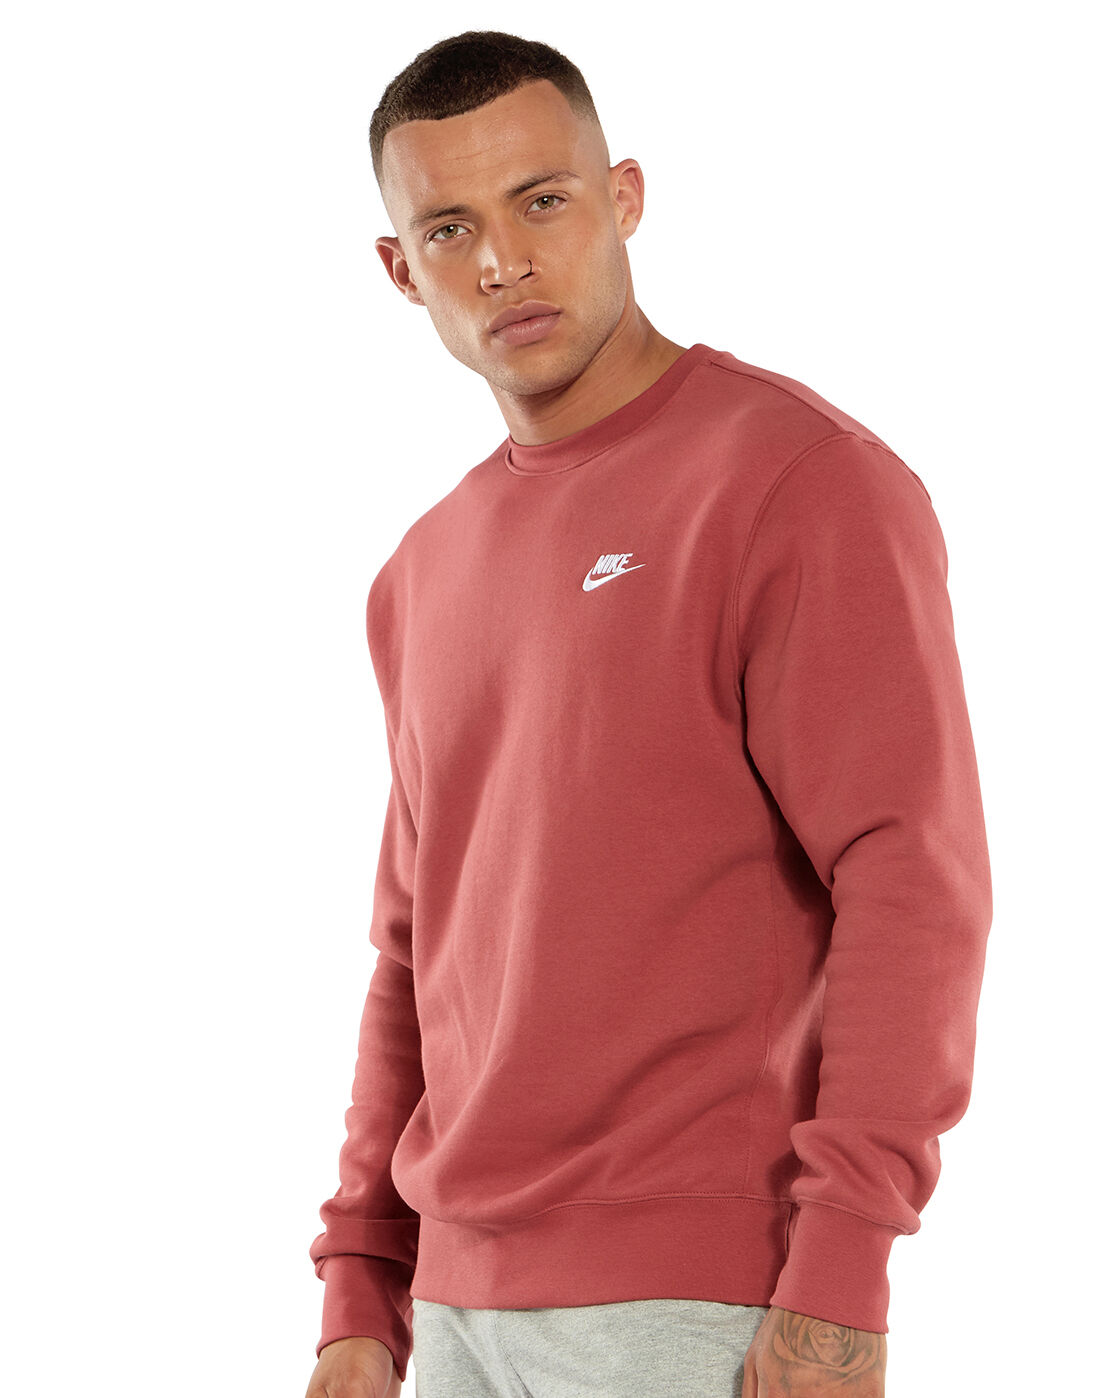 Men's Red Nike Sweatshirt | Life Style 